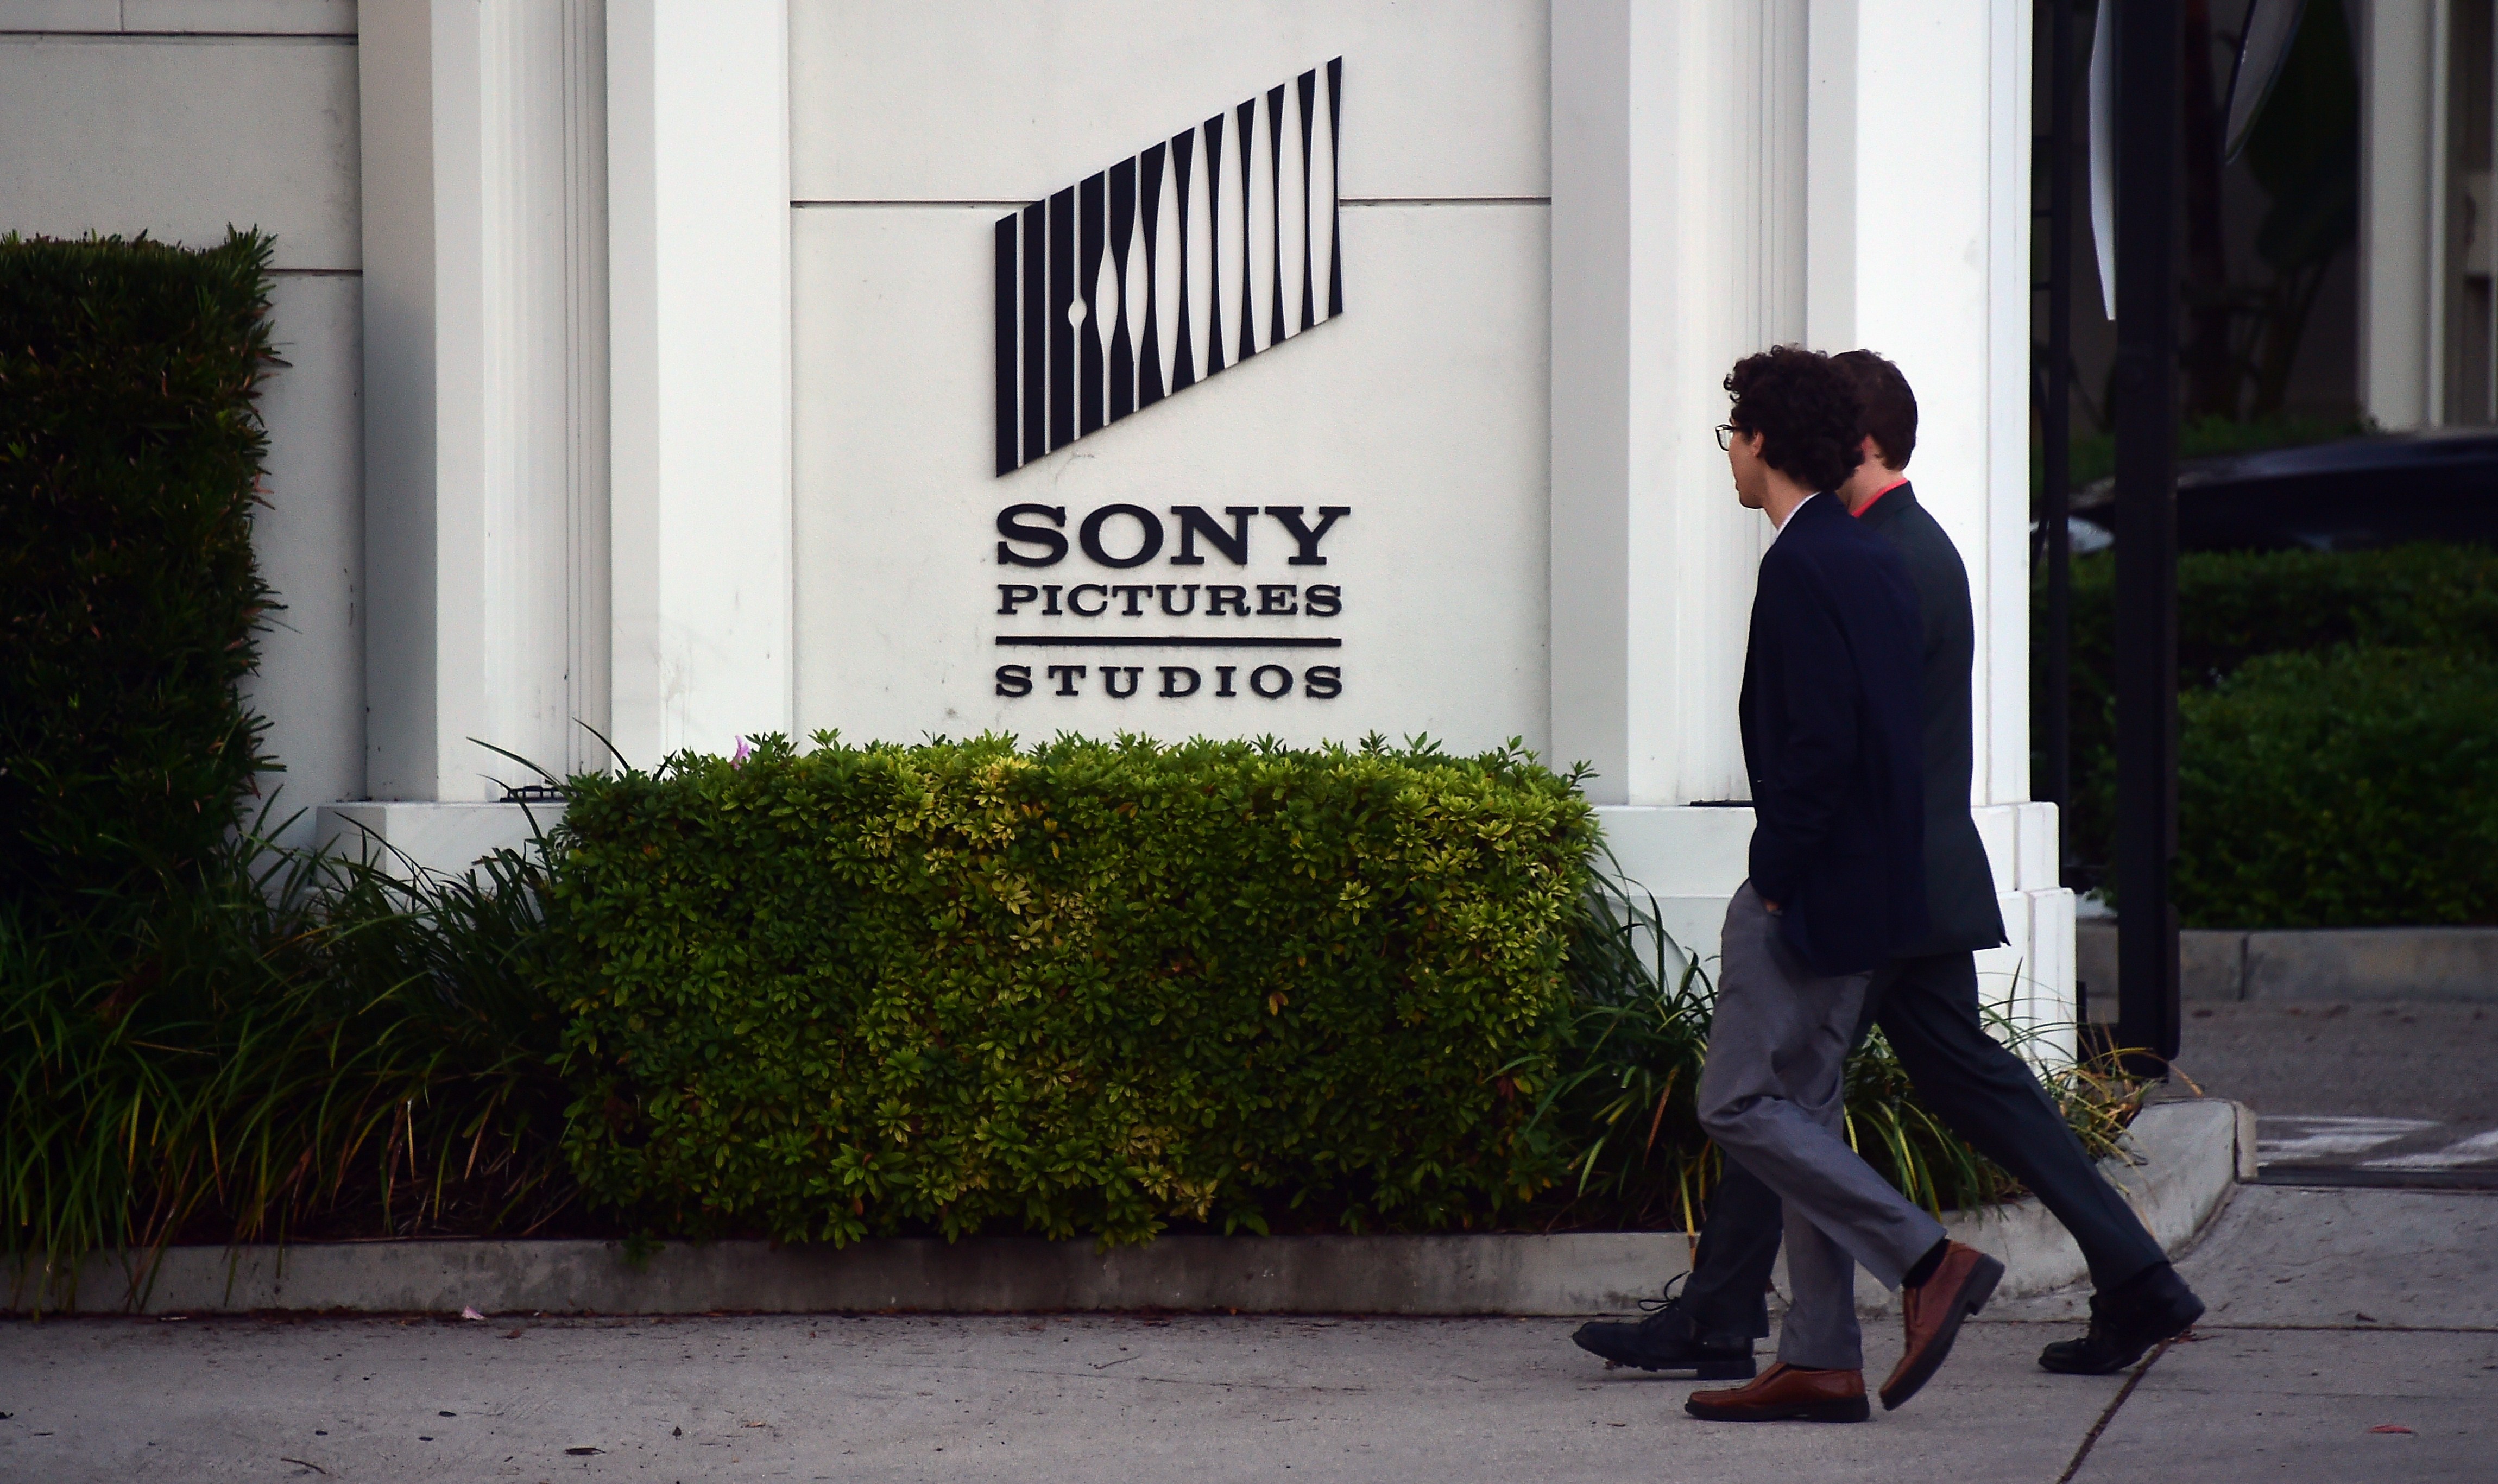 Pedestrians walk past Sony Pictures Studios in Los Angeles on Dec. 4, 2014.